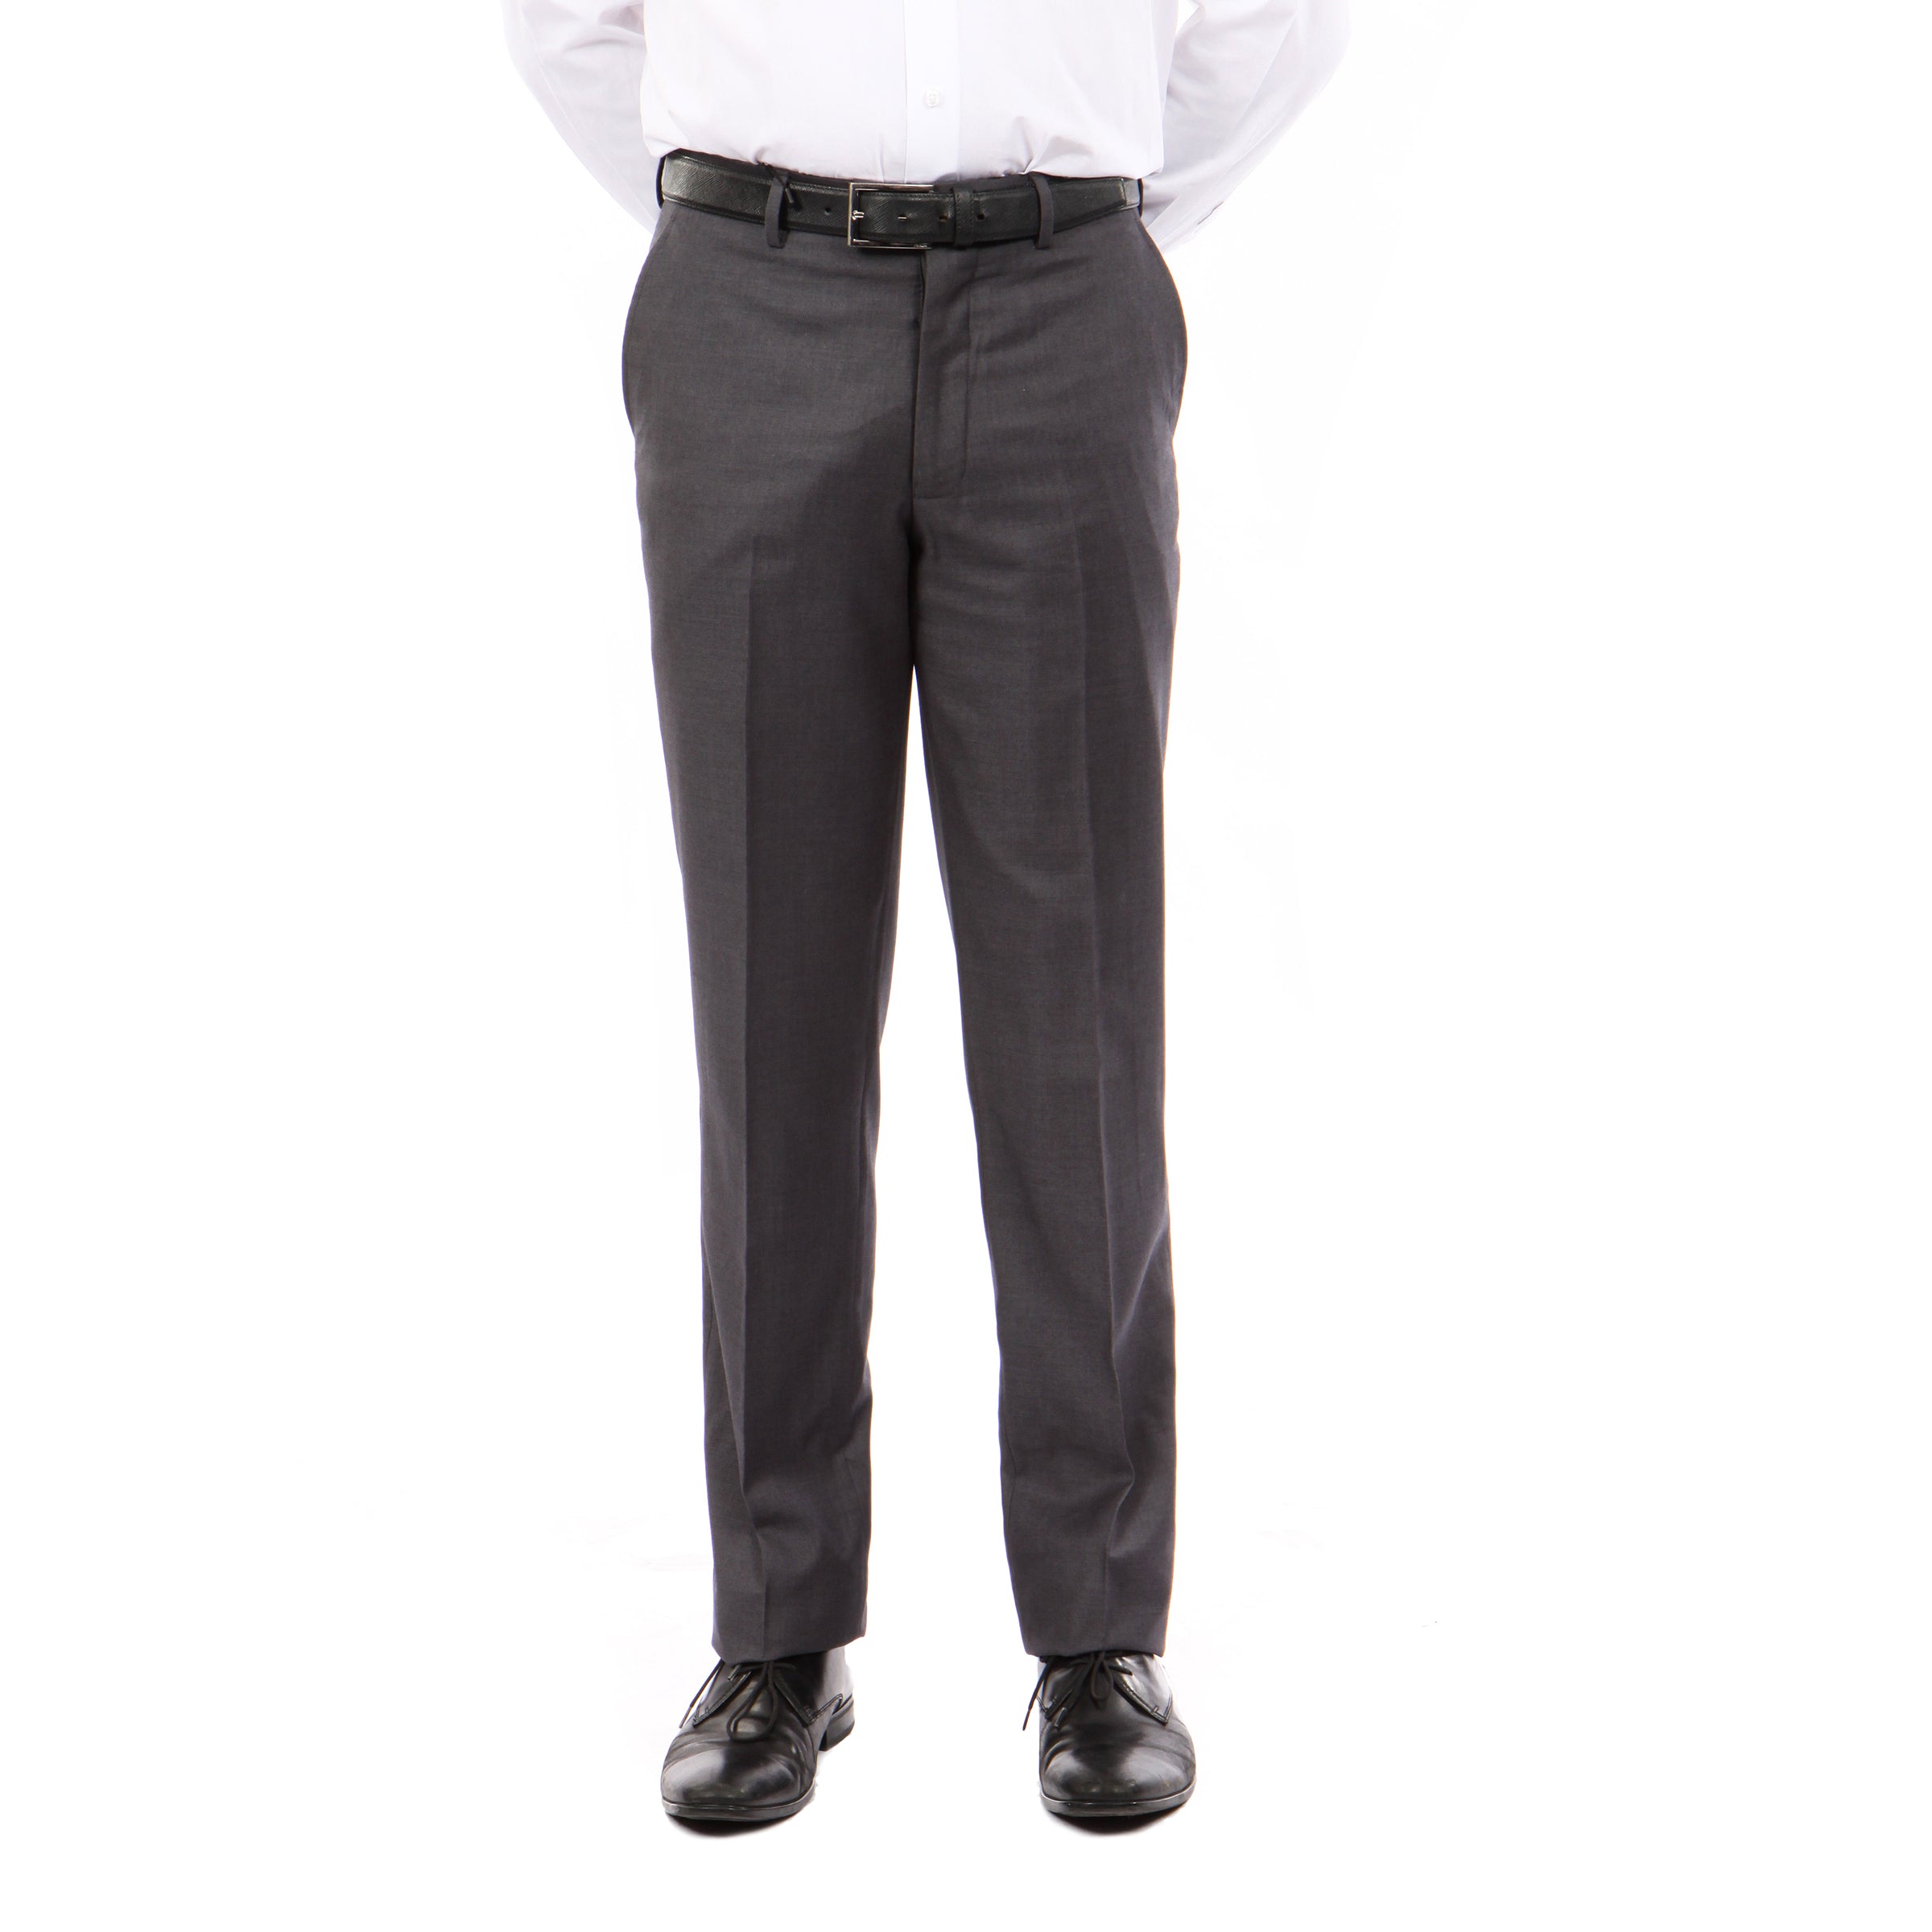 Tazio DK Grey Slim Fit Stretch Dress Pants For Men